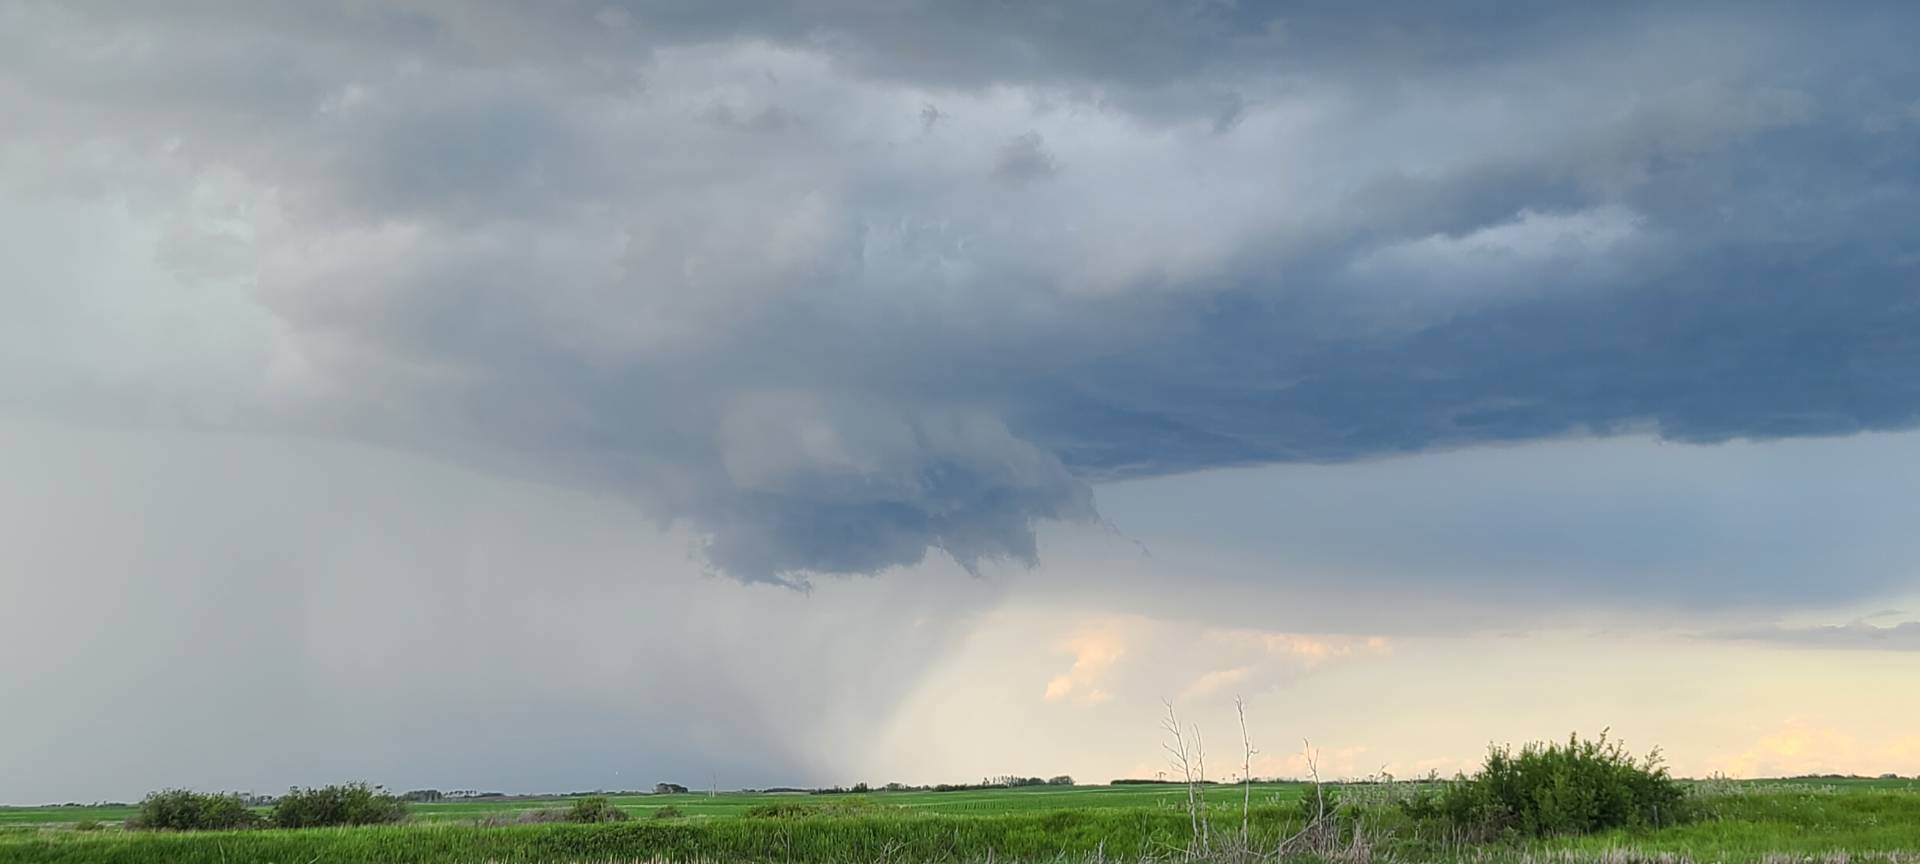 Wall cloud forming North of Grayson, Saskatchewan 05:47 PM @ECCCWeatherSK #SKstorm #SKwx